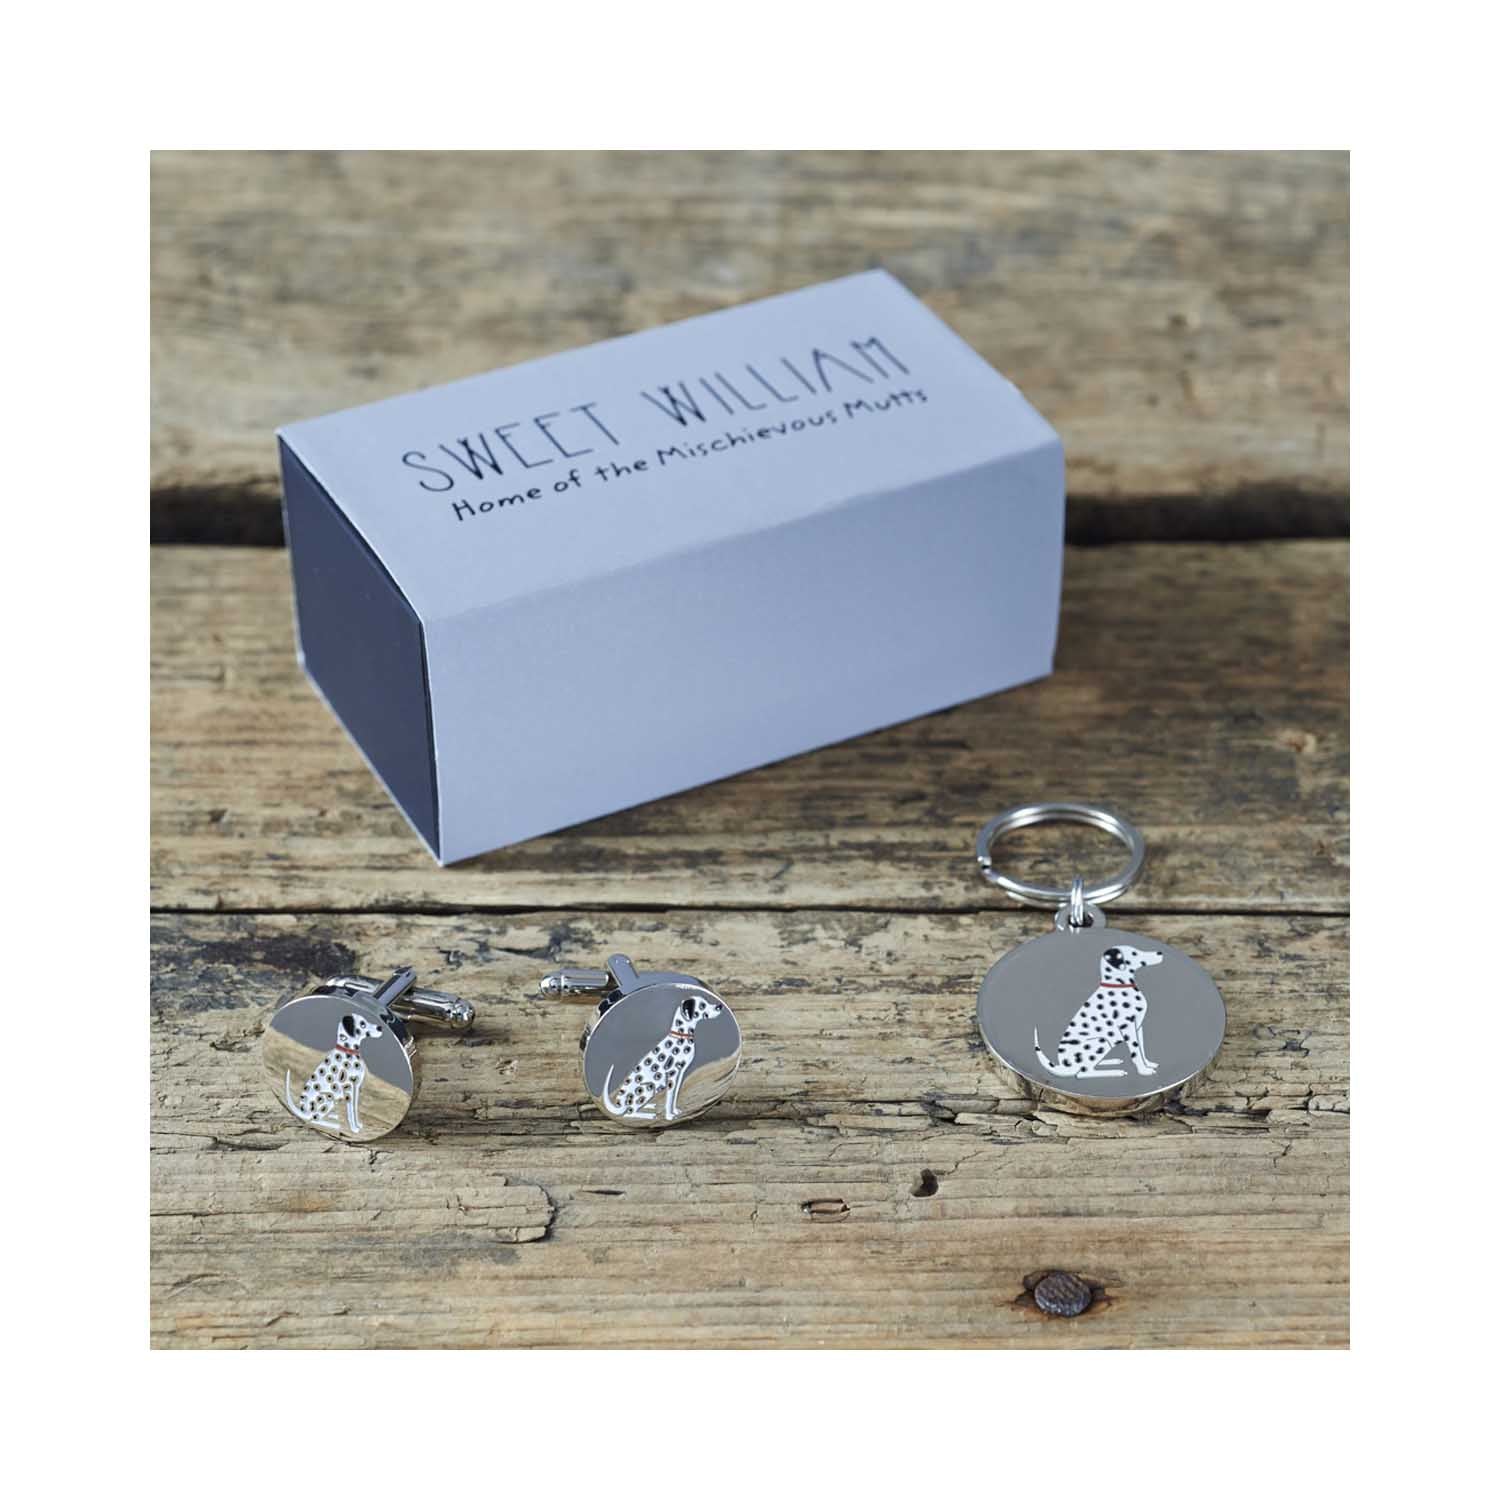 Dalmatian Earrings / Dalmatian Jewellery / Dalmatian Gift / Pet Jewellery /  Dog Jewellery / Animal Jewellery / Animal Lover Gift -  UK